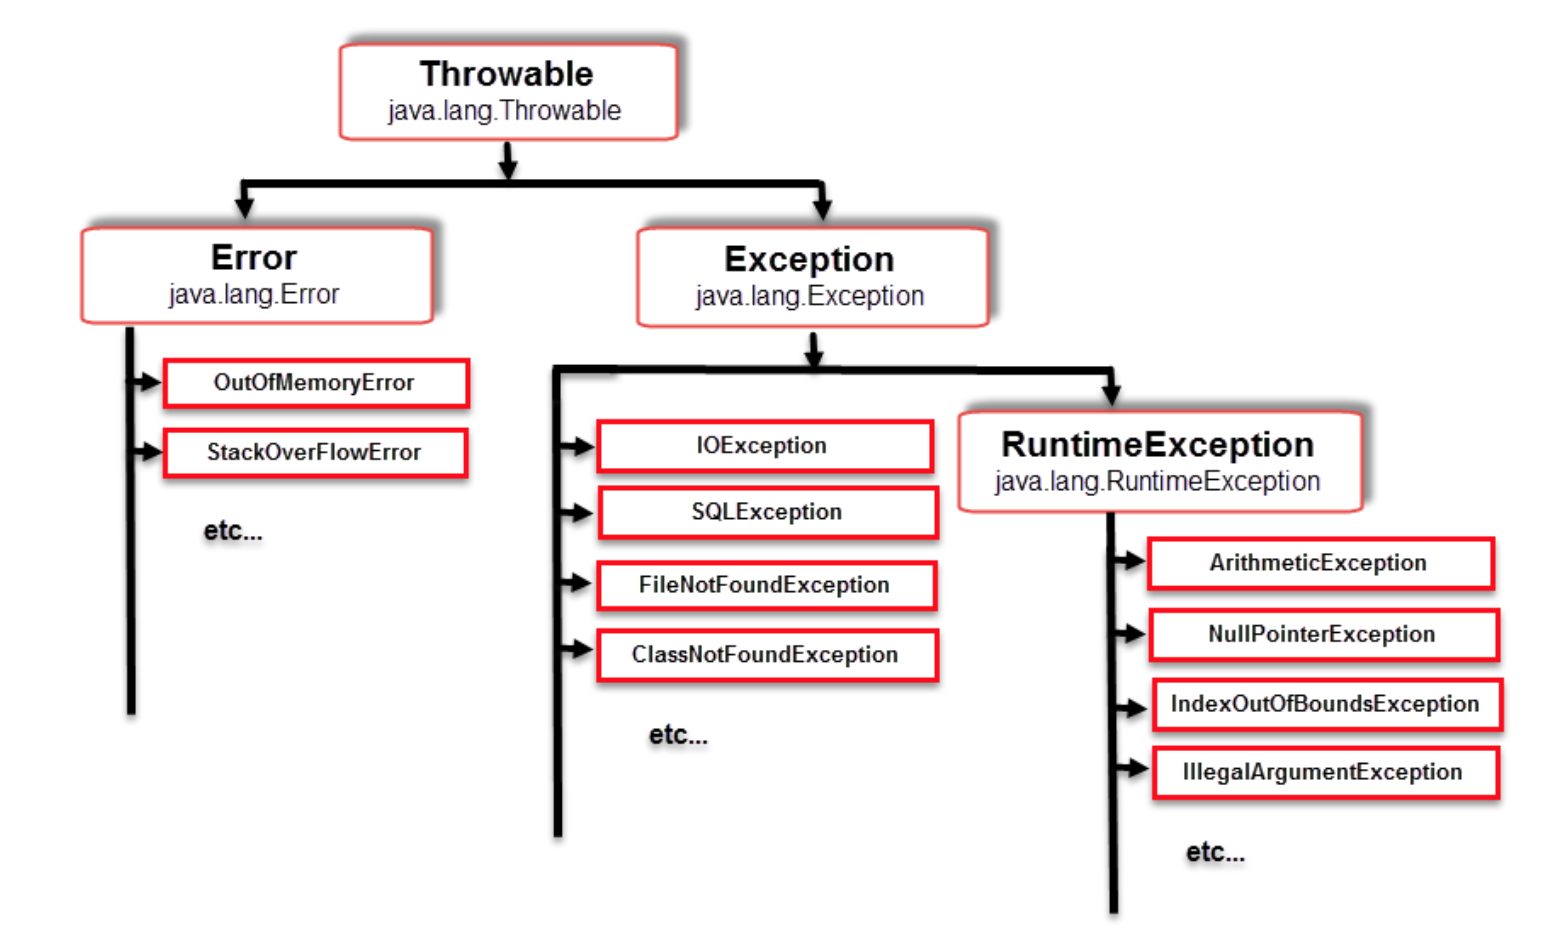 Java certpathvalidatorexception. Иерархия наследования исключений java. Структура исключений java. Таблица исключений java. Дерево исключений java.